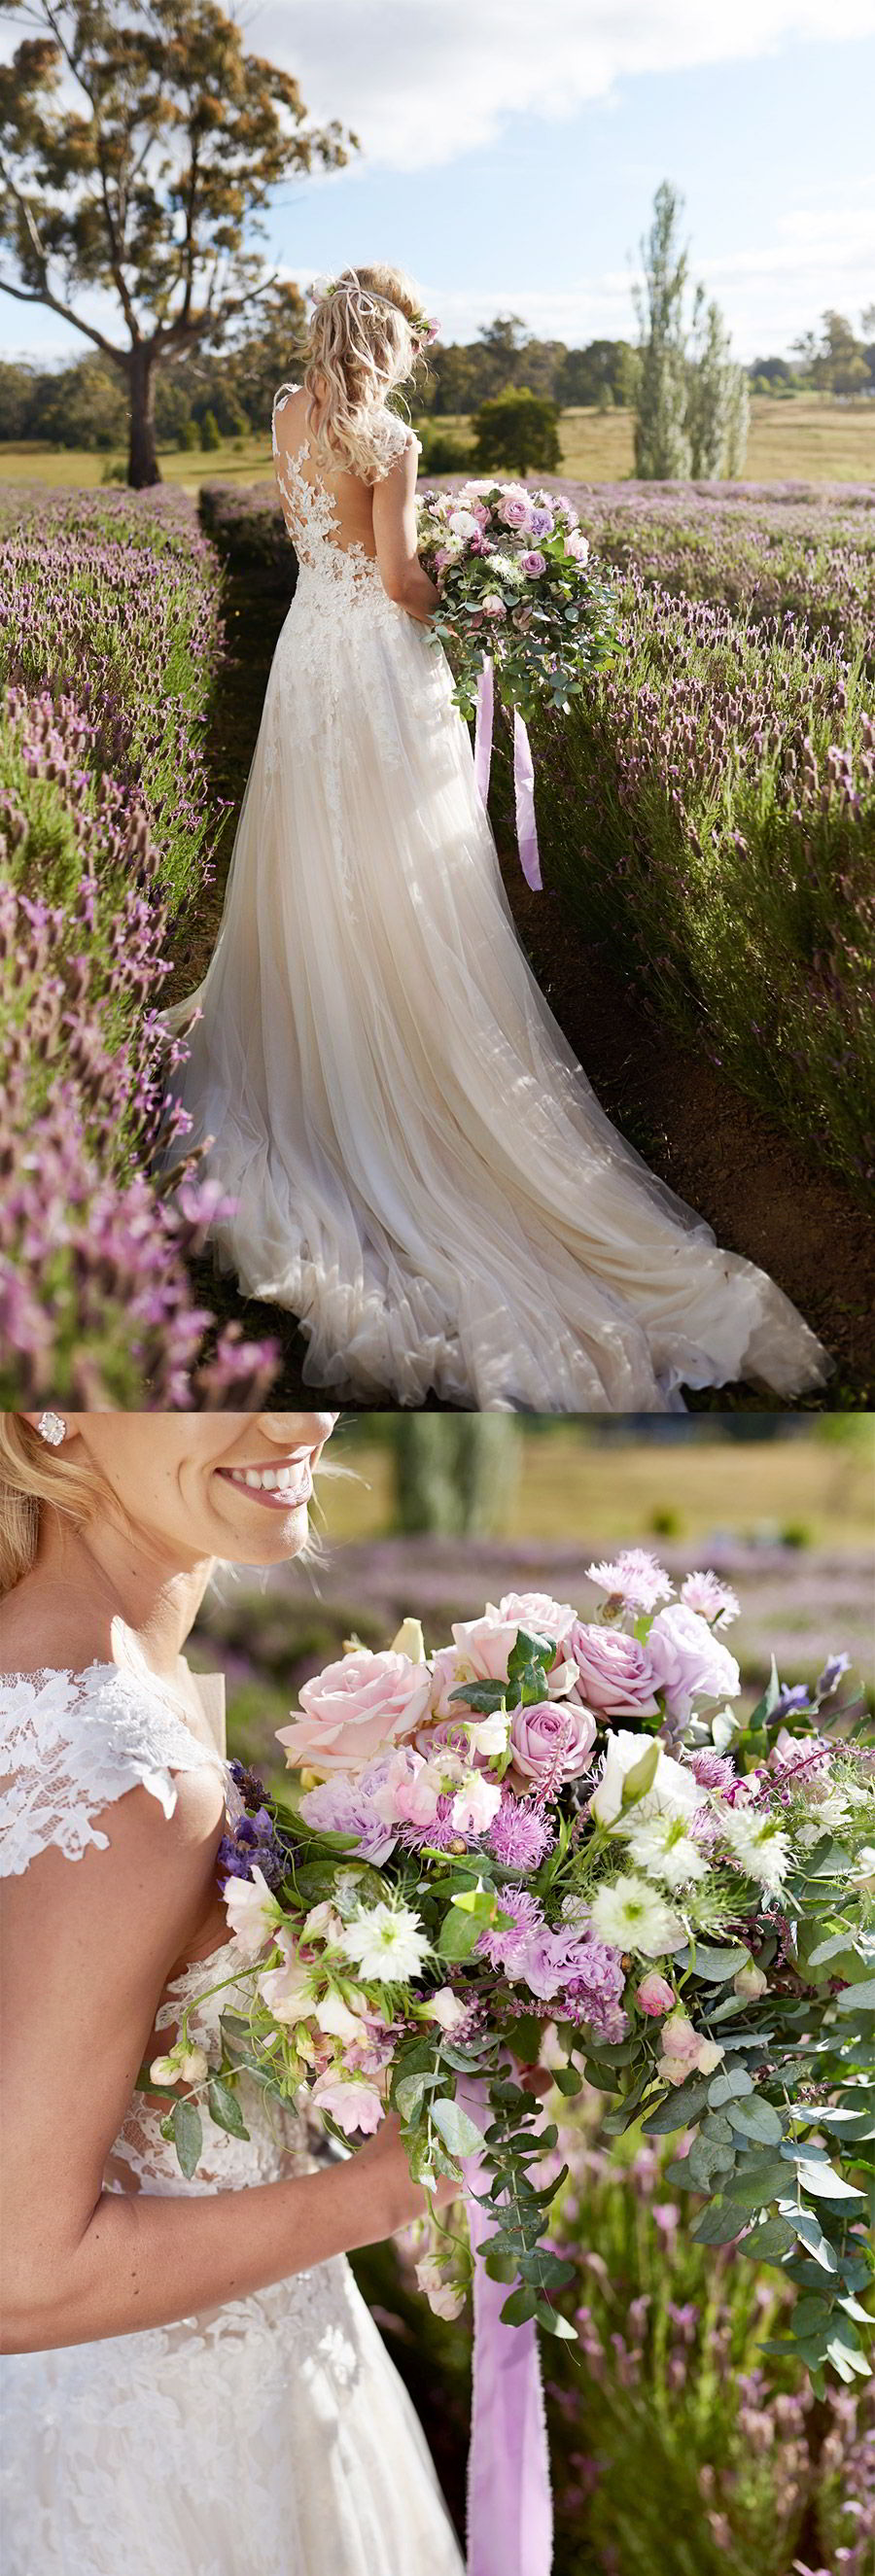 lavender field wedding photo shoot adorn invitations purple gold boho luxe inspiration romantic lace wedding dress pink violet bouquet